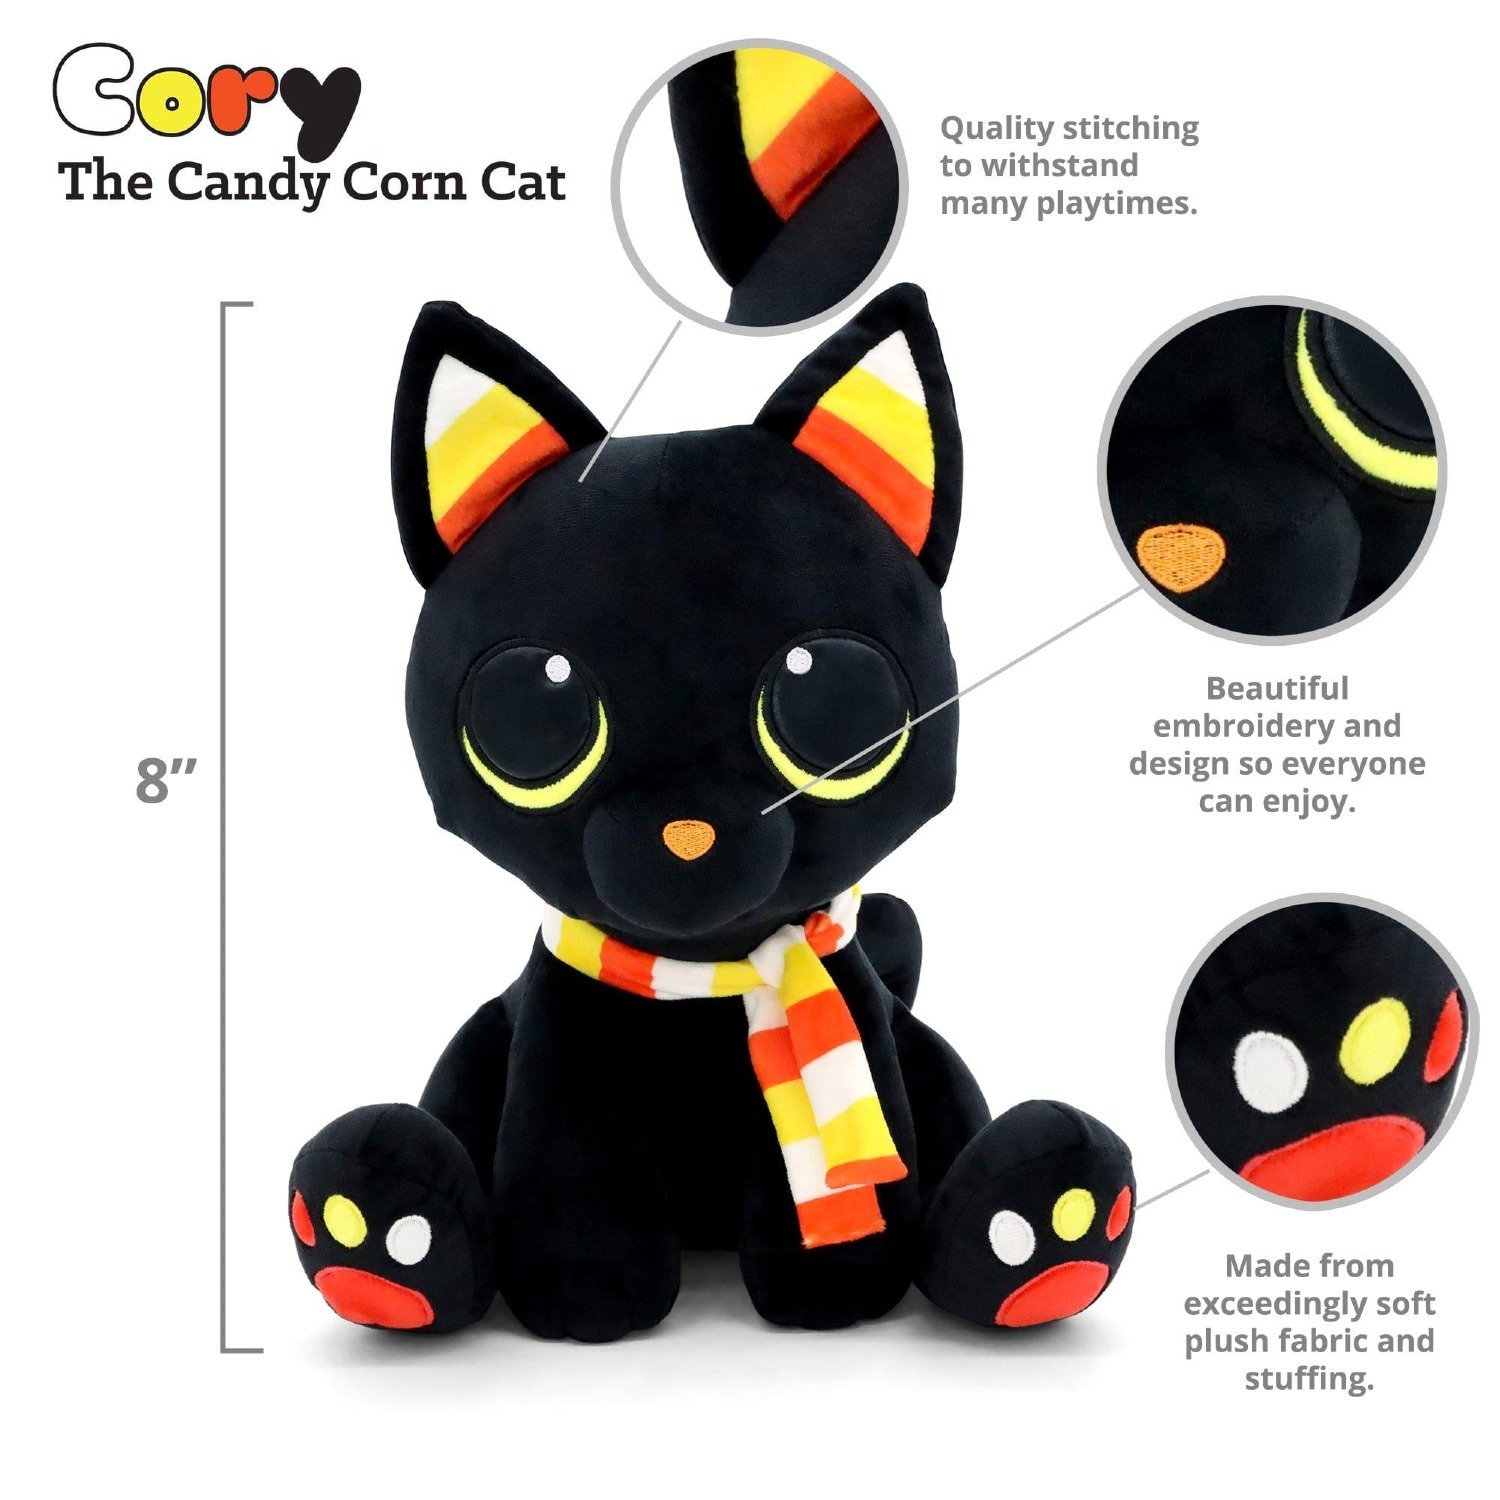 Plushible Halloween Black Vampire Cat Plushie (Viktor) Stuffed Animal Decoration $11 & More + Free Shipping